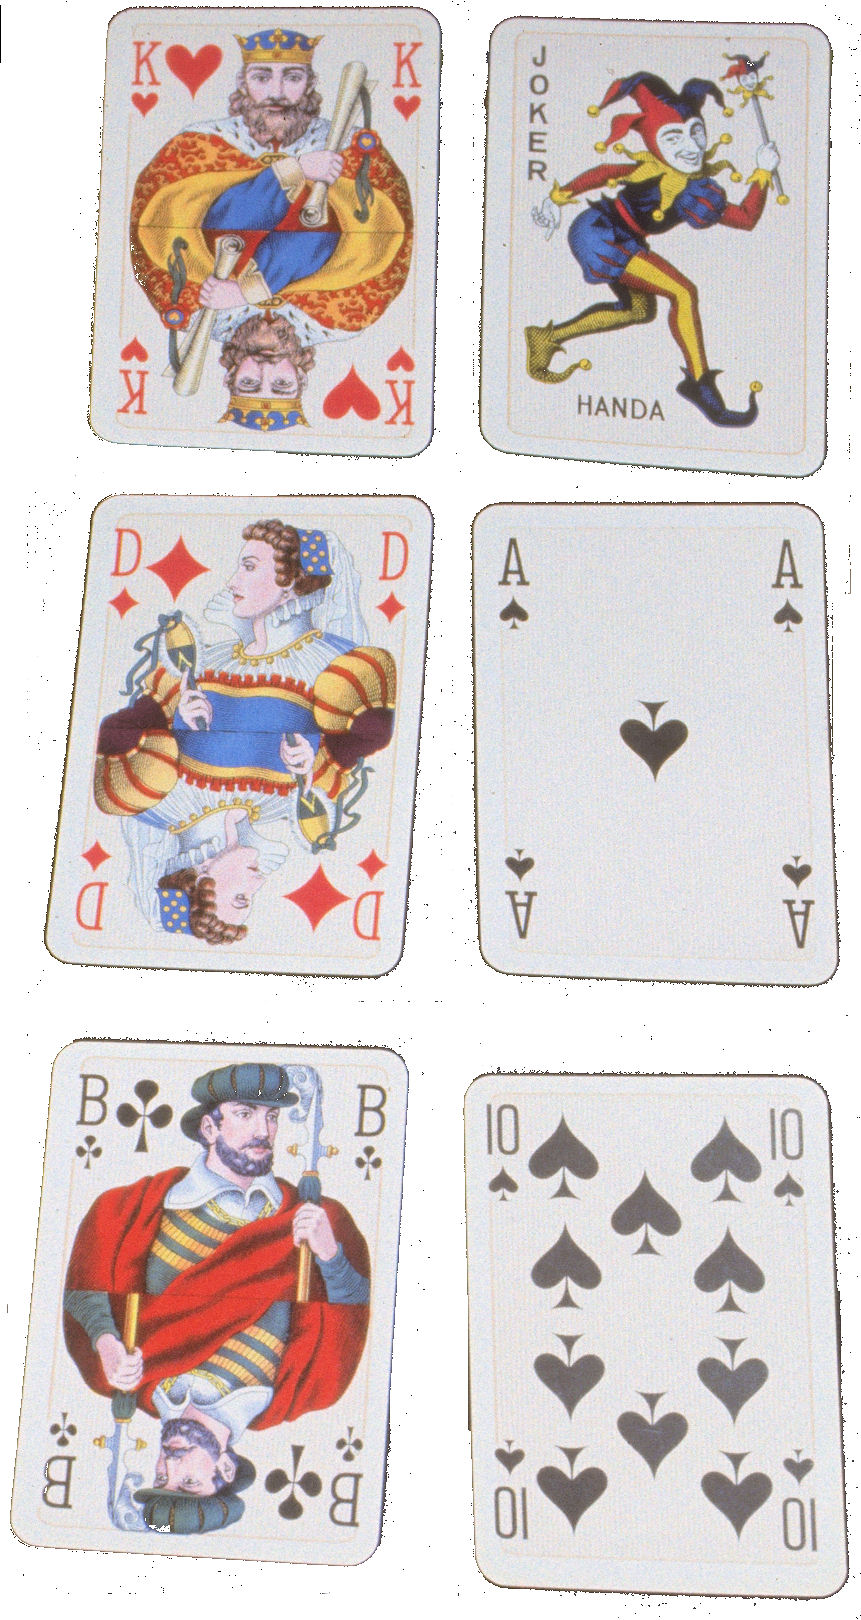 Danish playing cards